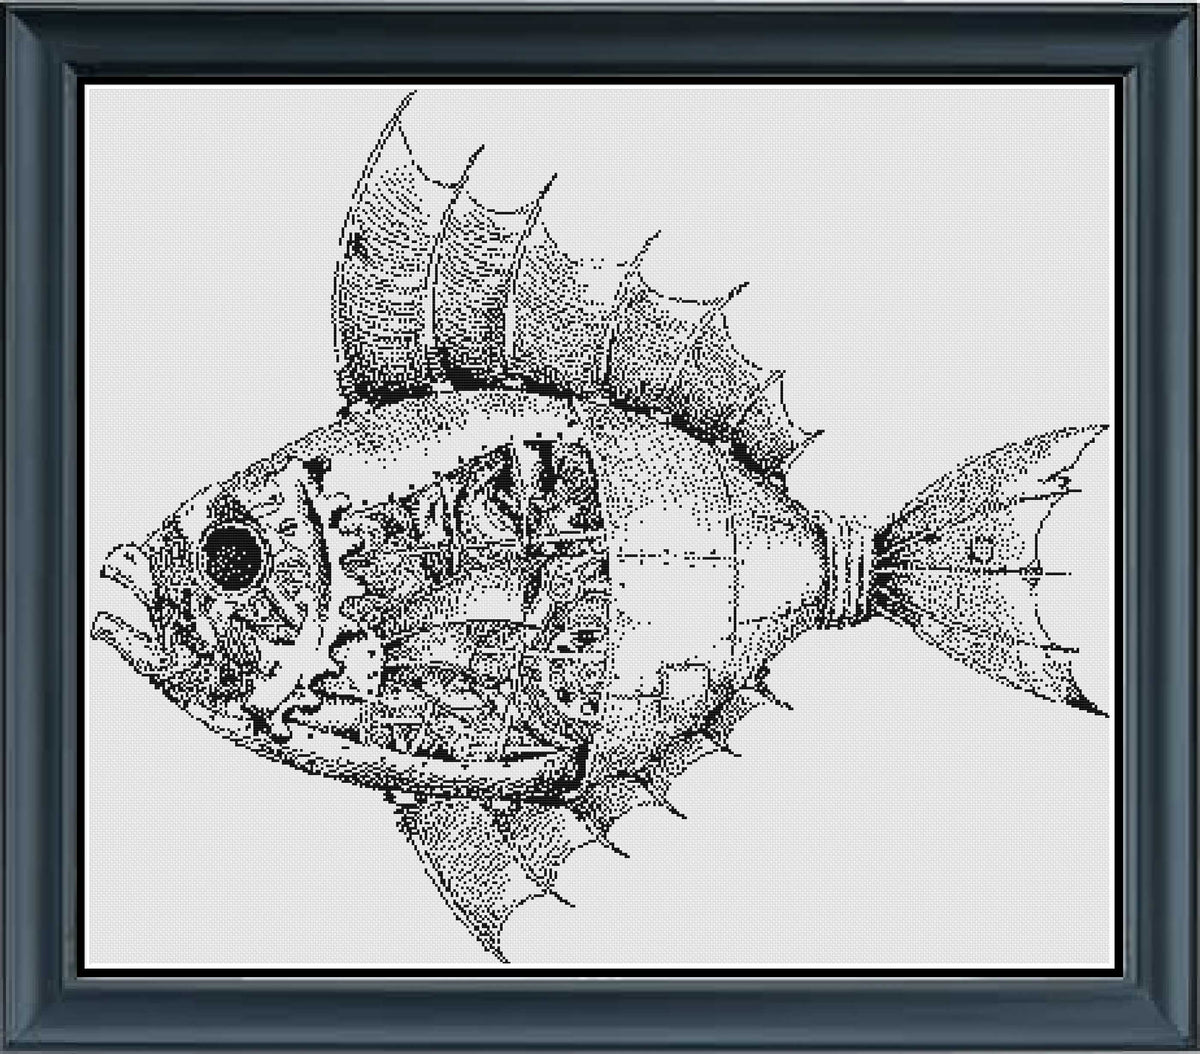 Stitching Jules Design Cross Stitch Pattern Steampunk Fish Monochrome Cross Stitch Pattern Instant PDF Download